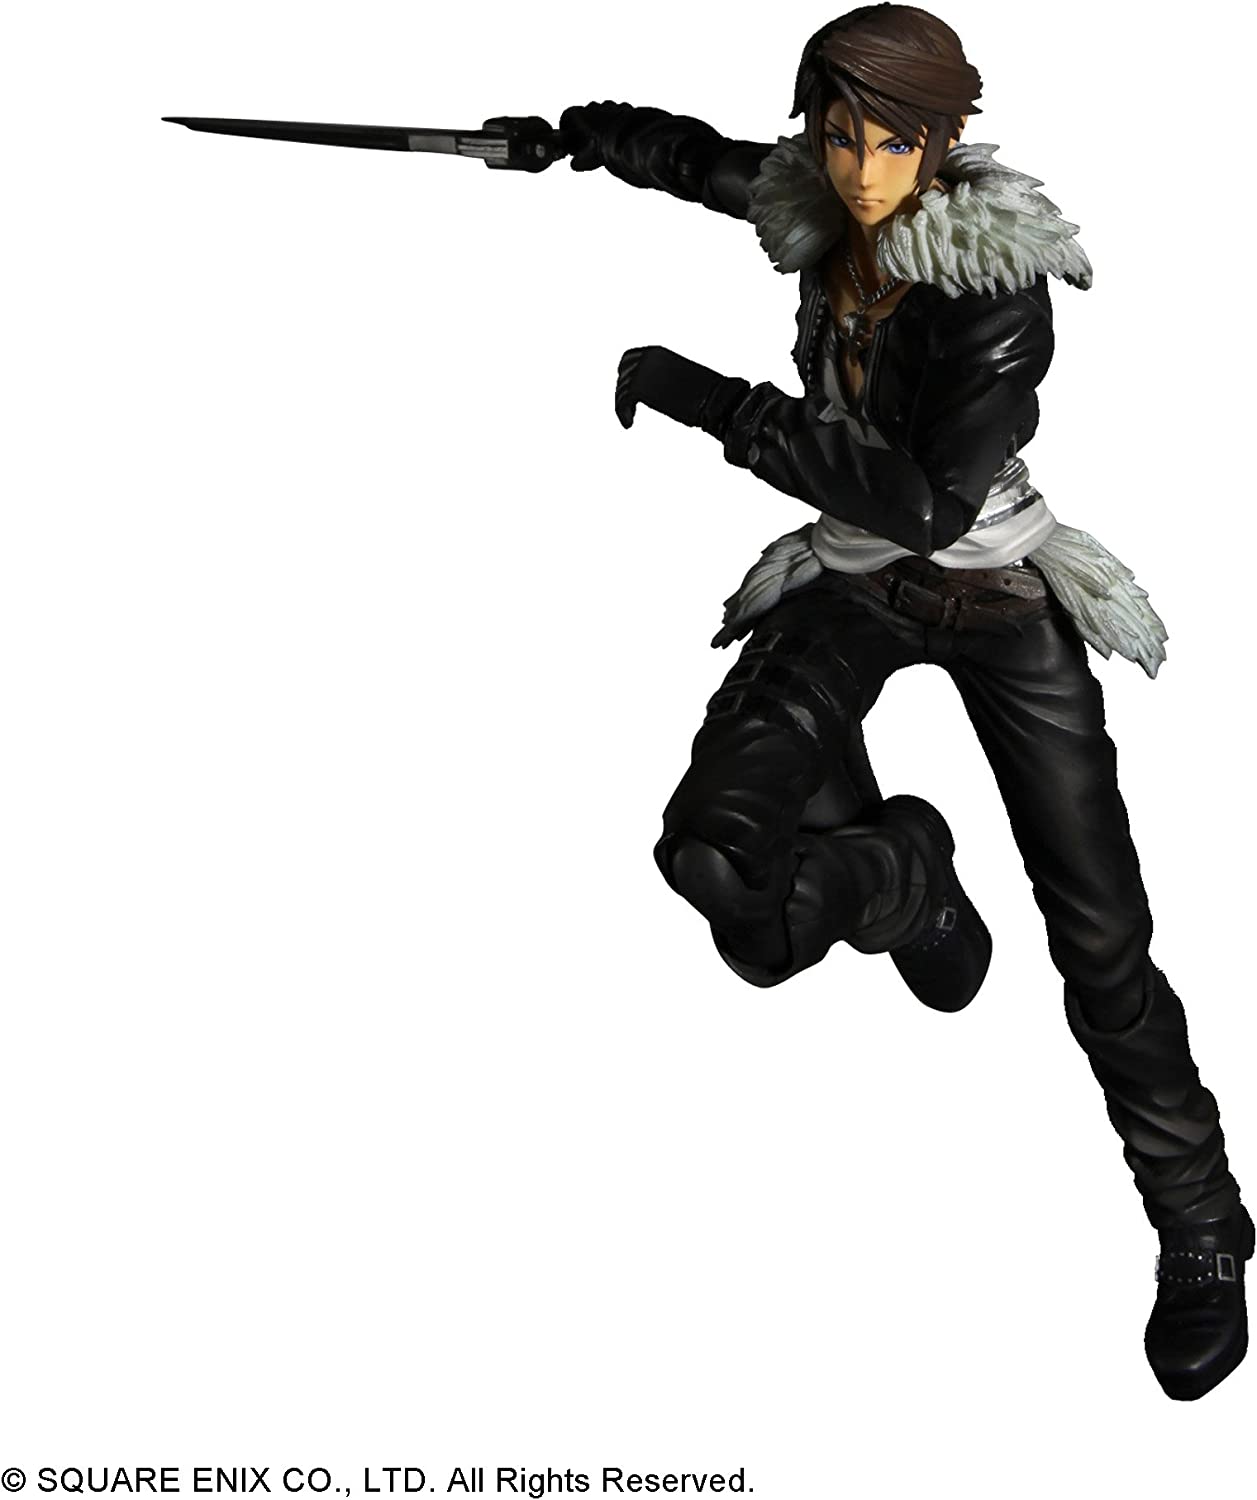 Final Fantasy VIII Squall Leonhart Action Figure